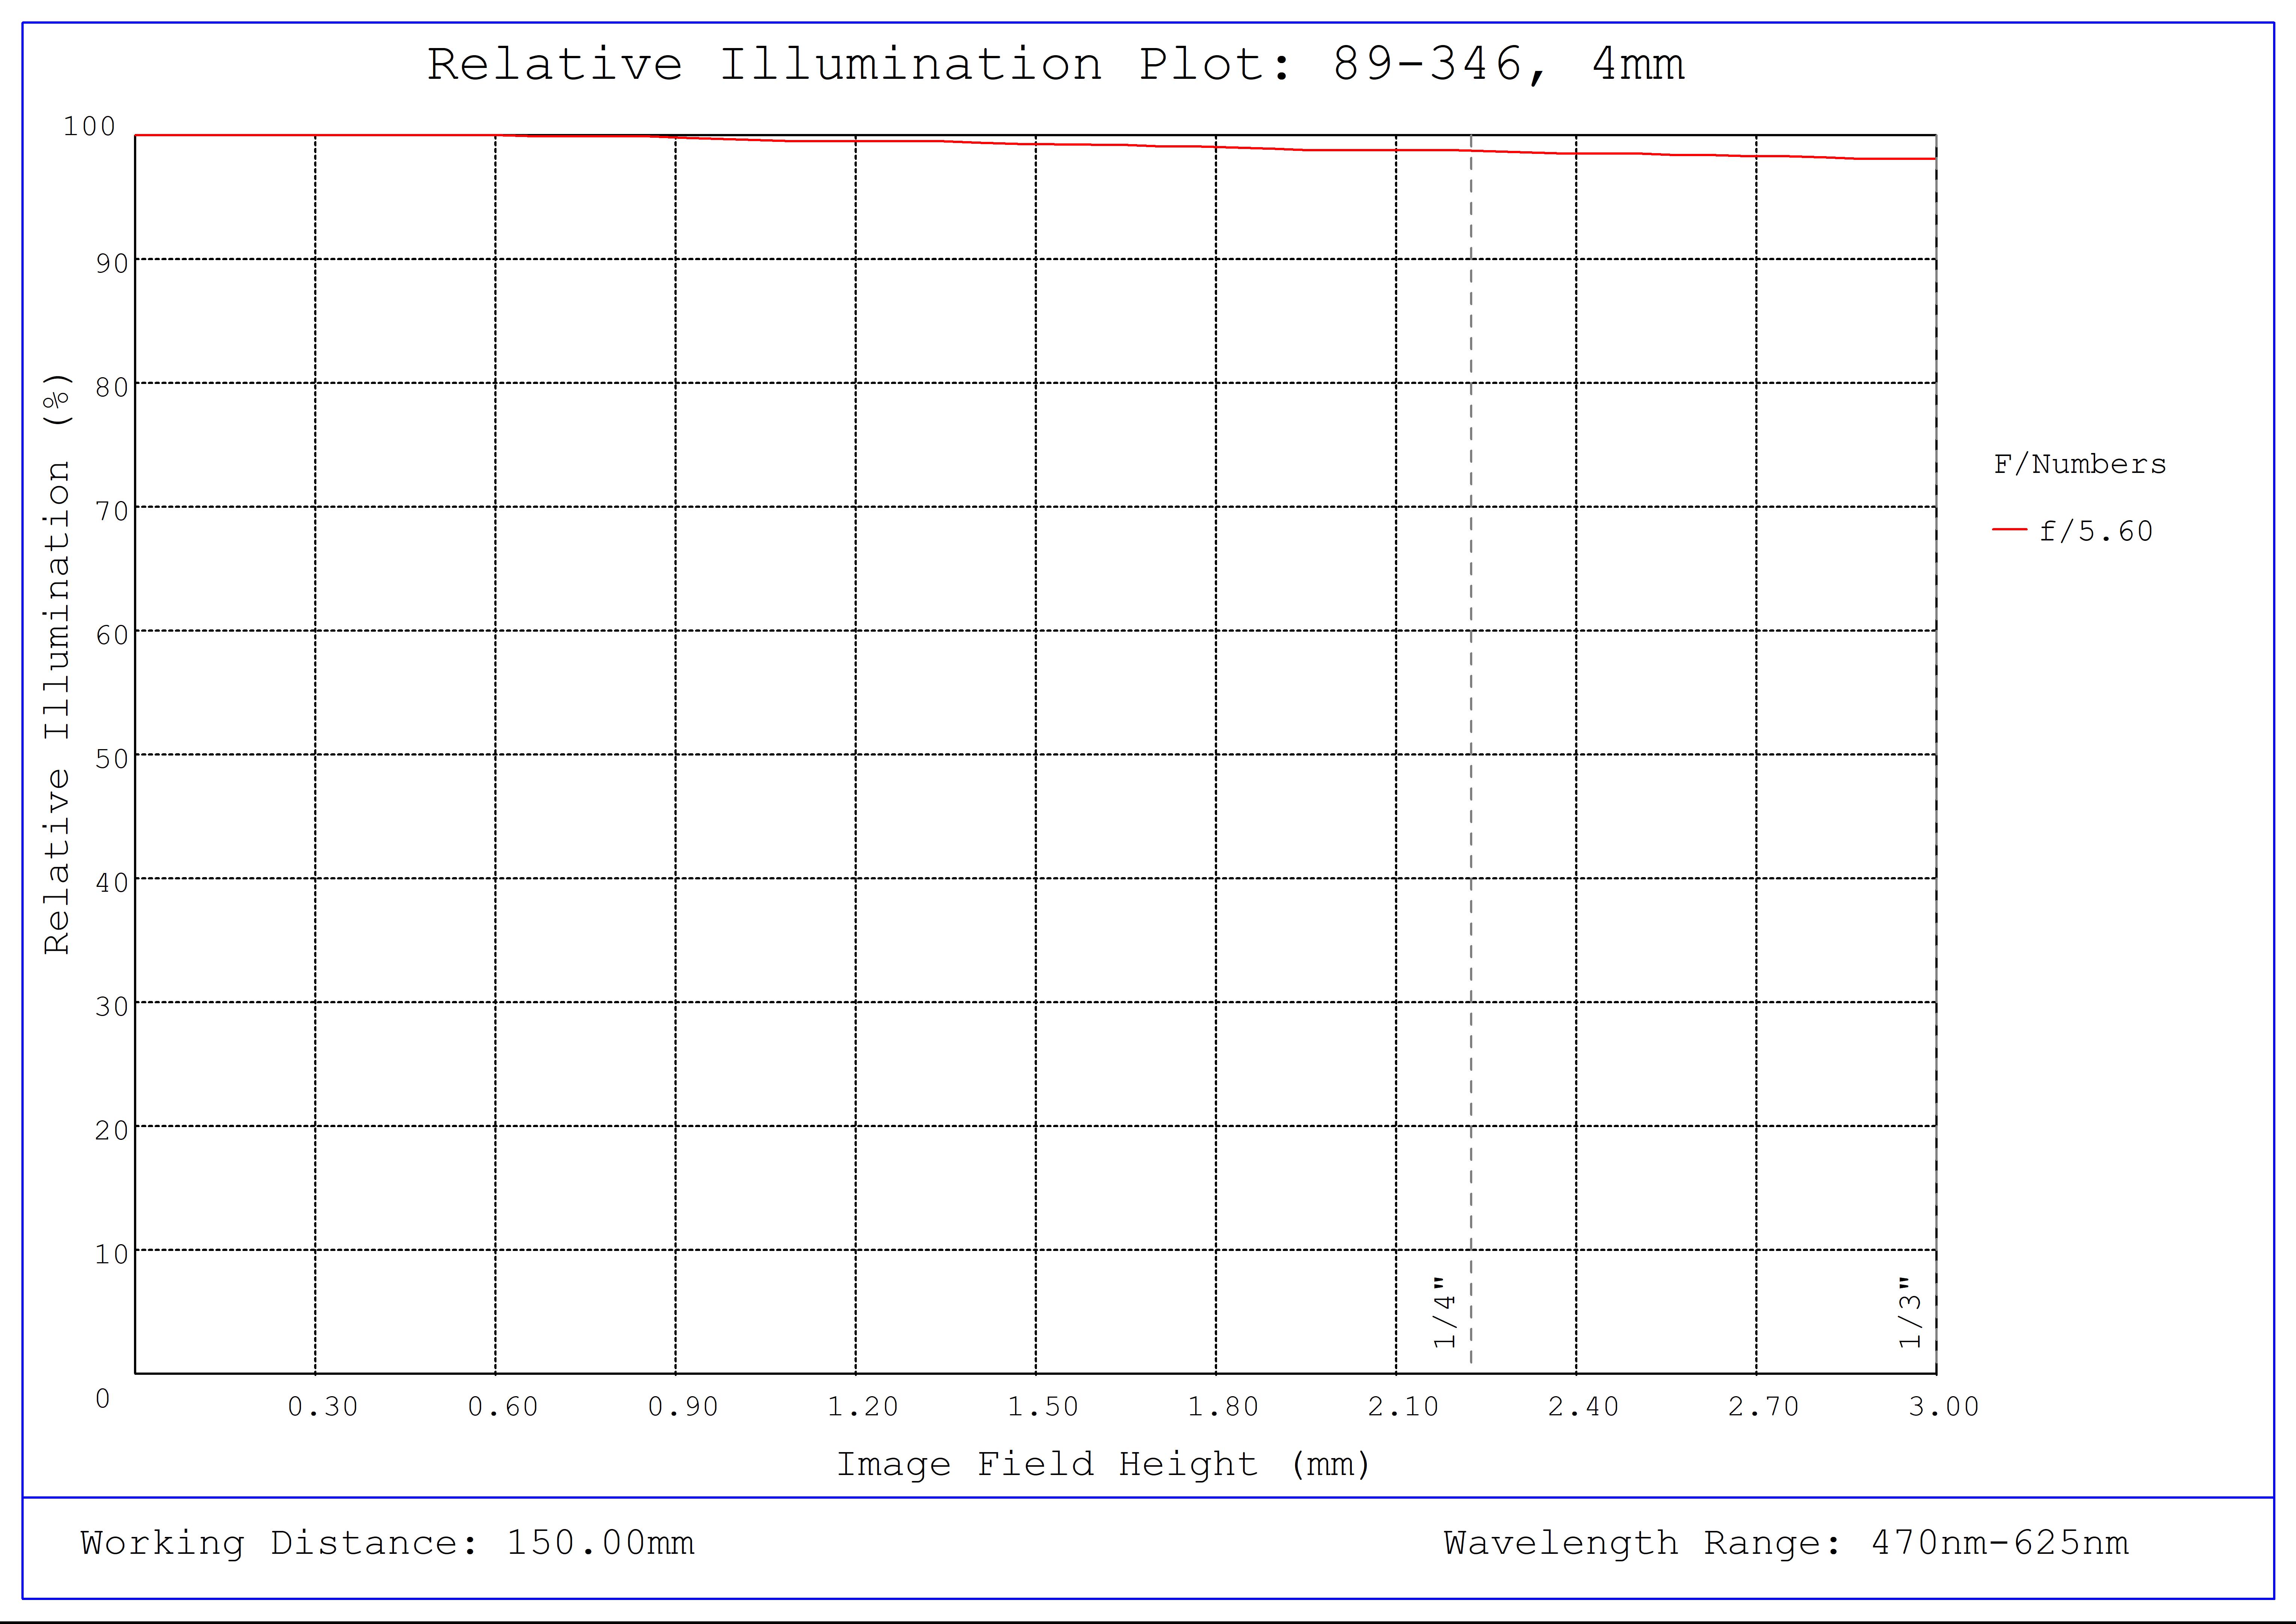 #89-346, 4mm FL f/5.6, Blue Series M12 Lens, Relative Illumination Plot